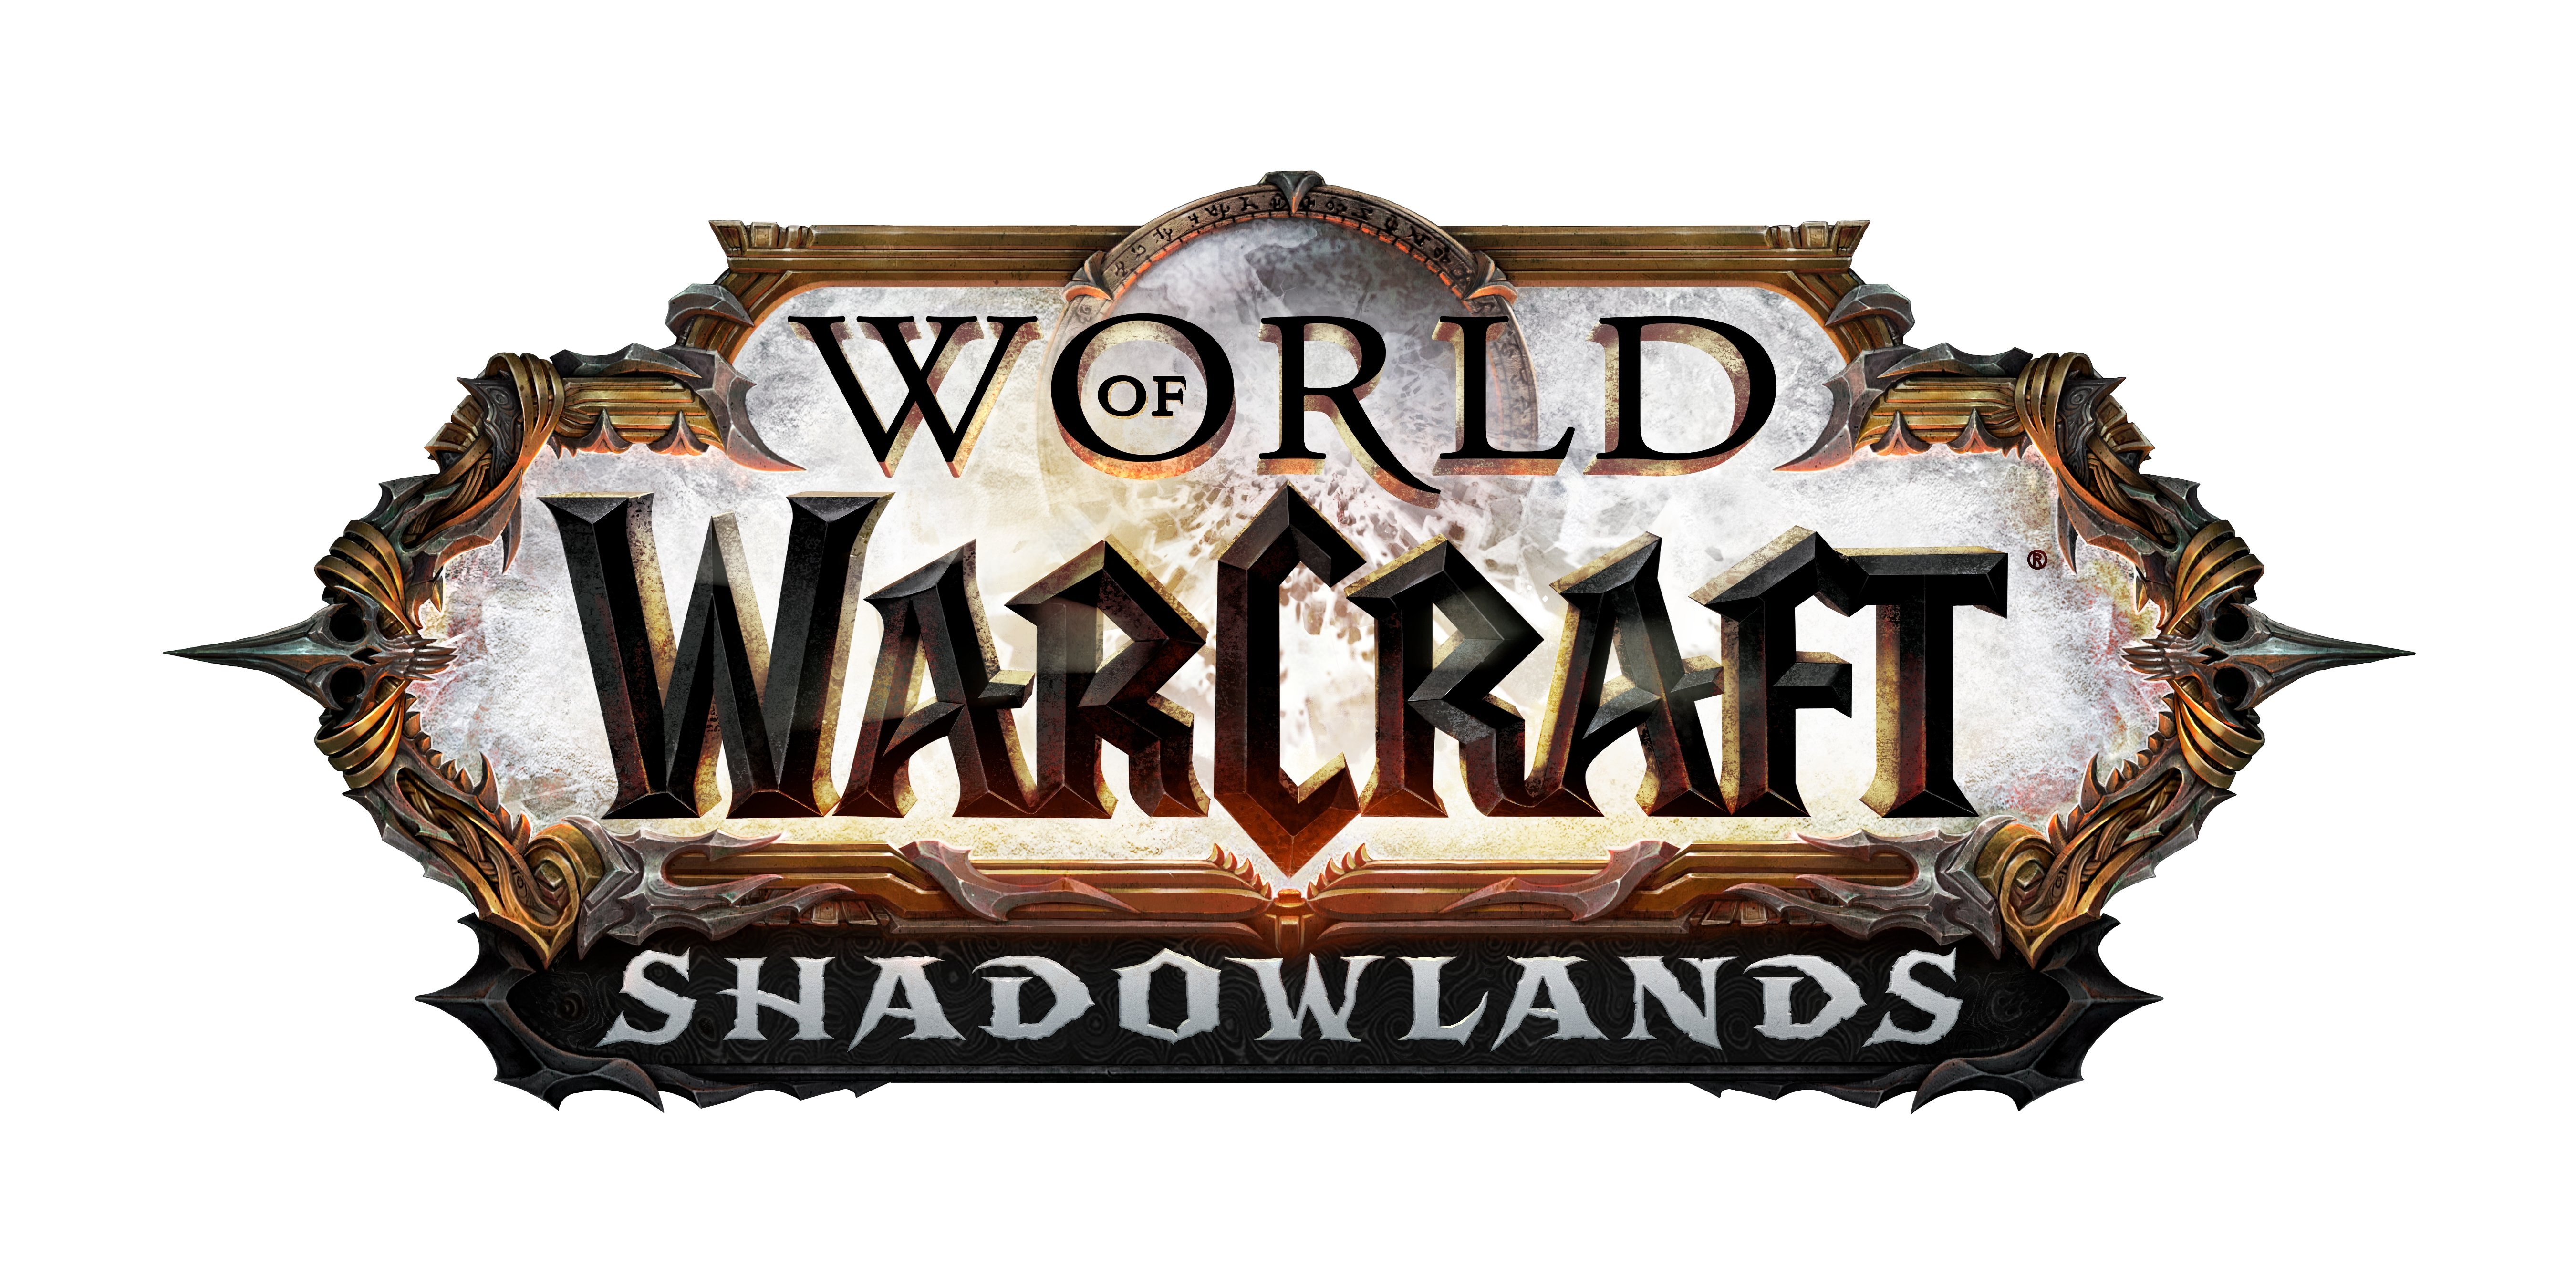 download world of warcraft shadowlands